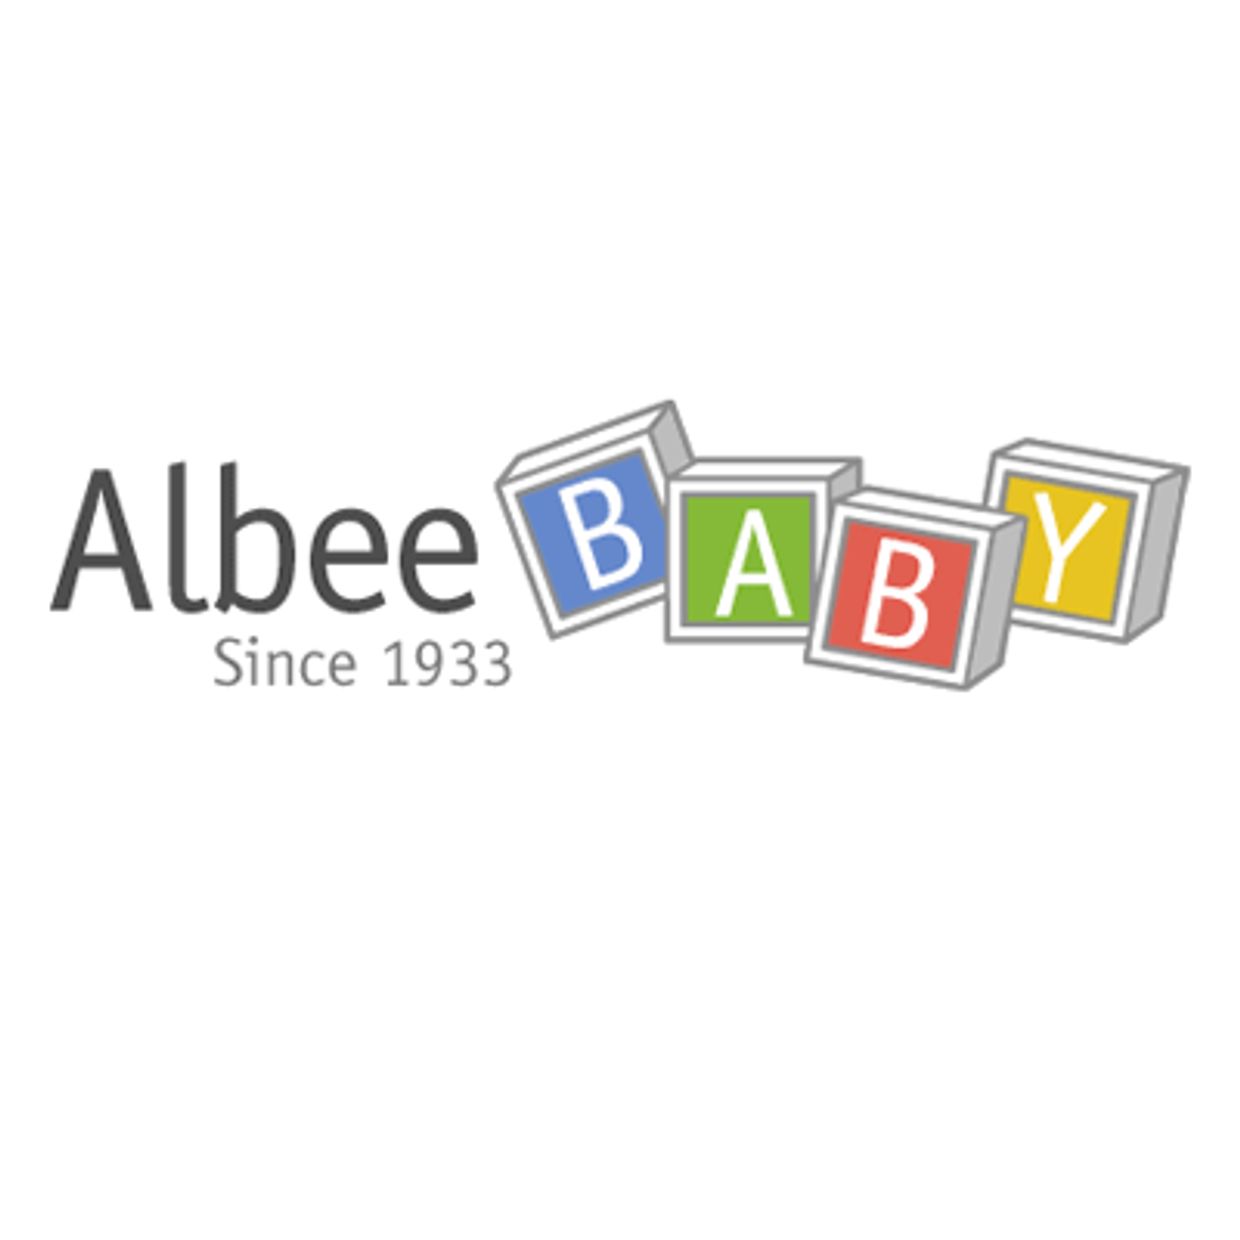 Albee Baby logo with blocks